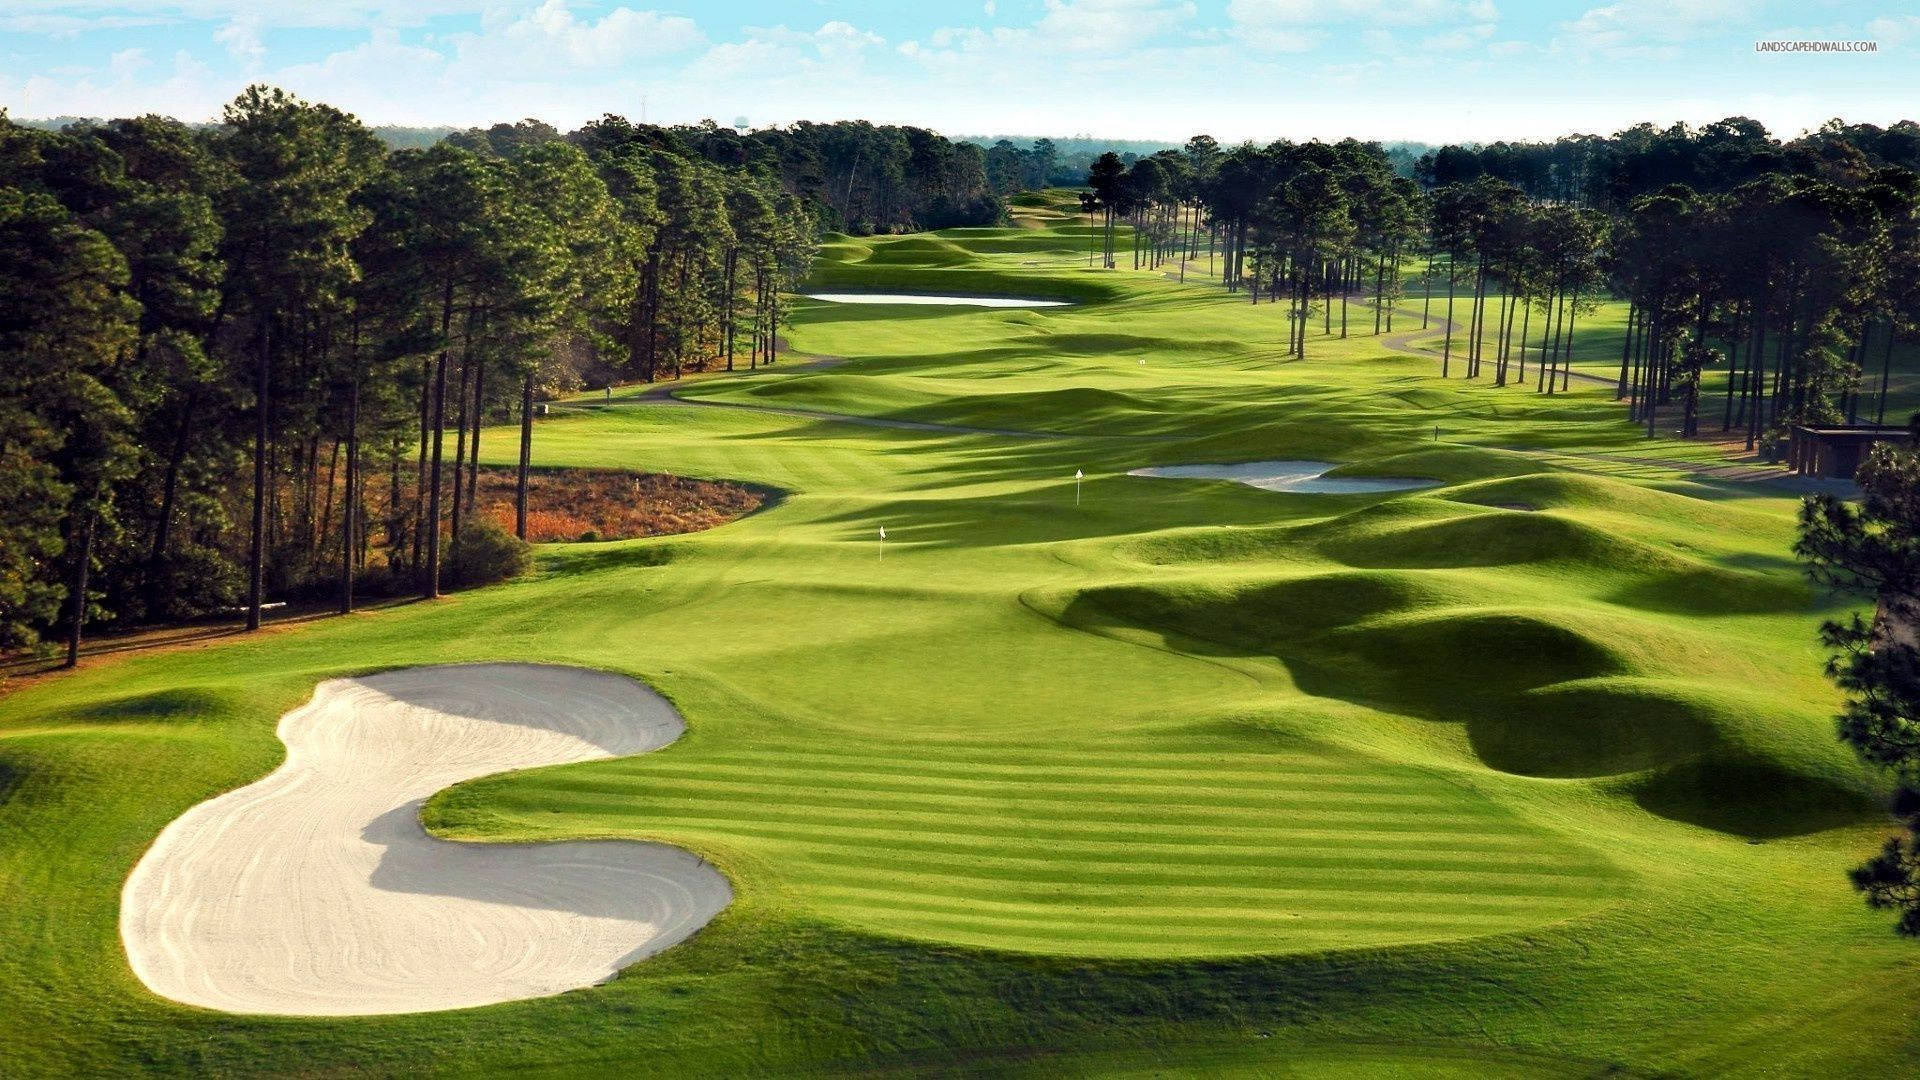 4k Golf Course Wallpaper Images